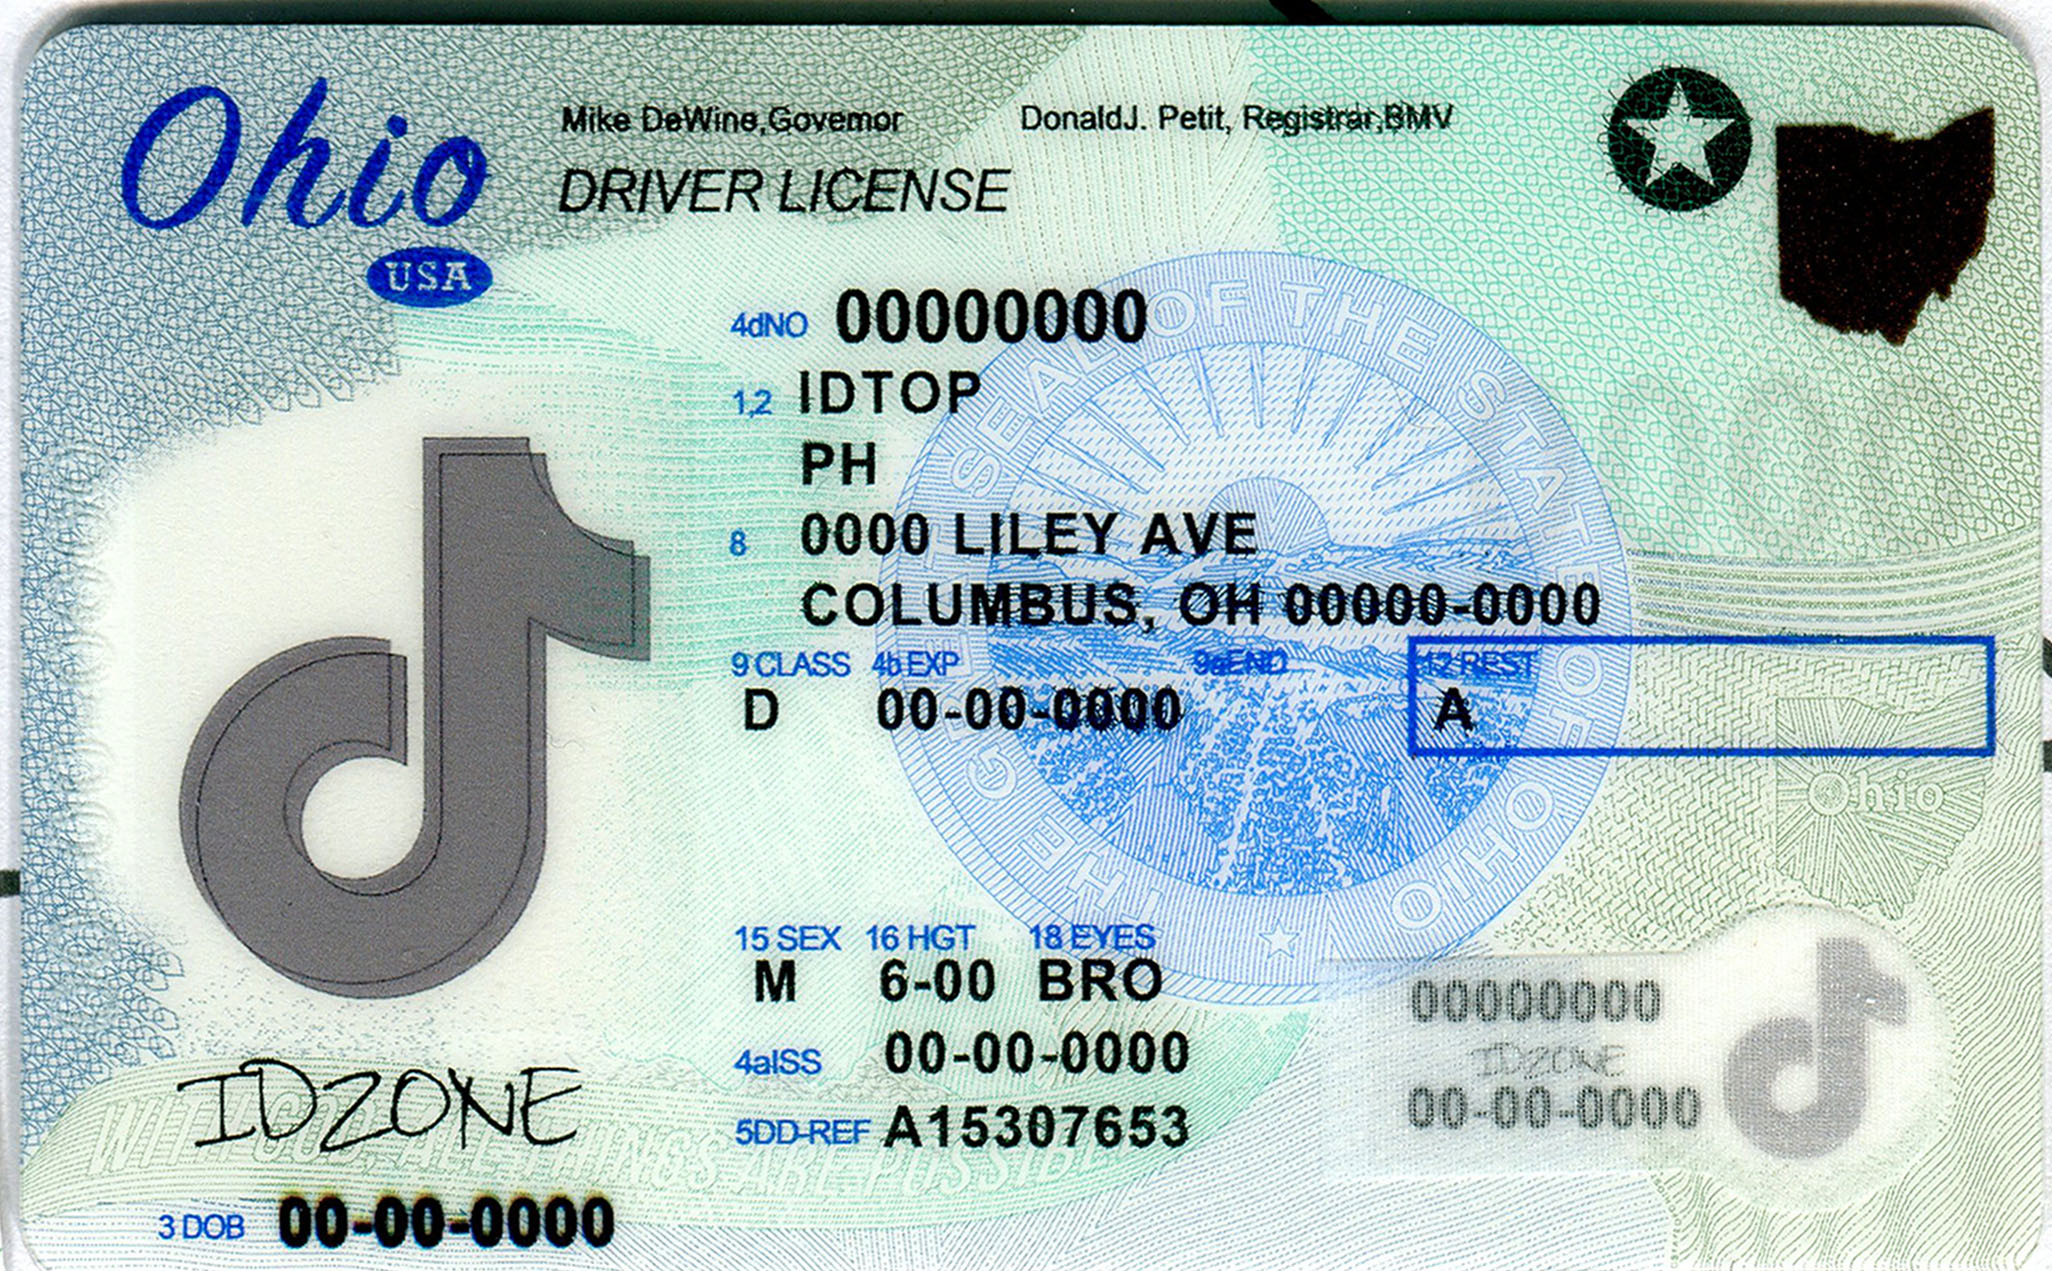 OHIO-New fake id